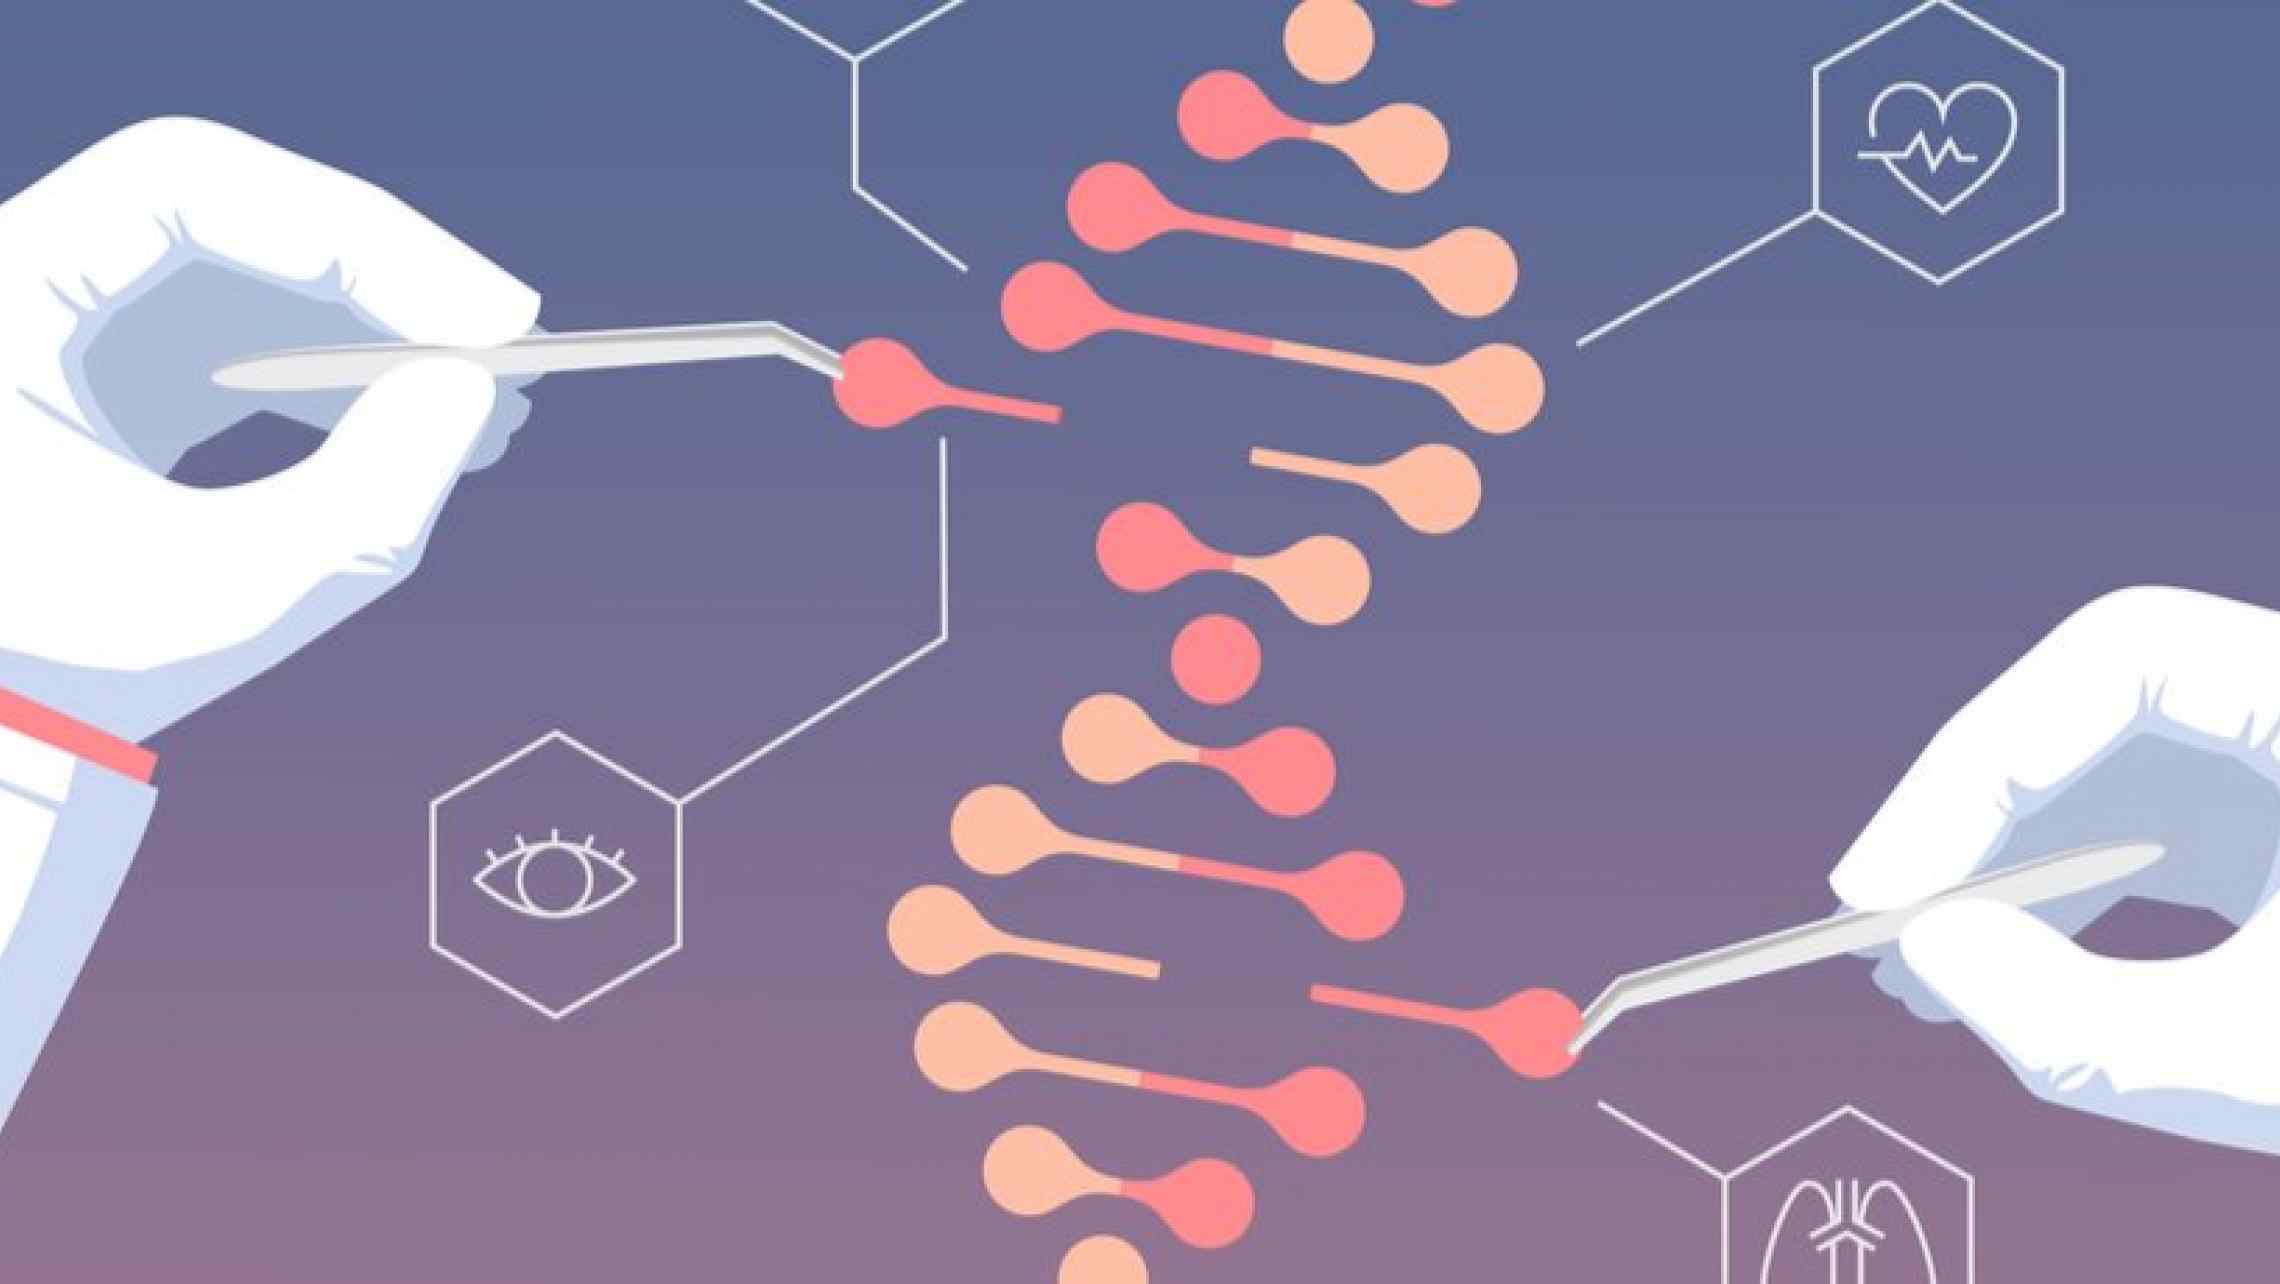 CRISPR: WHAT IS THE FUTURE OF GENE EDITING?